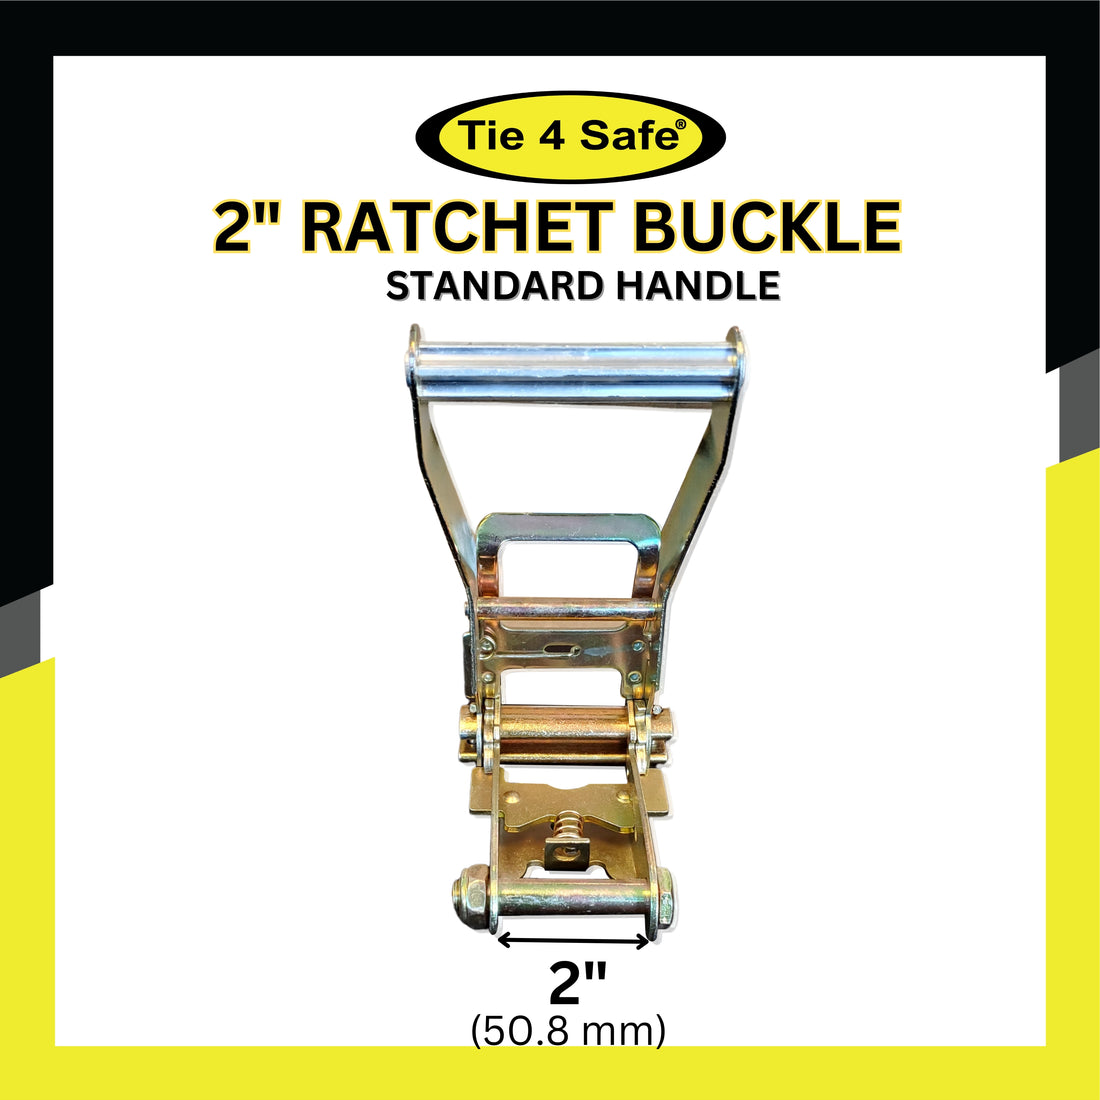 2" Ratchet Buckle